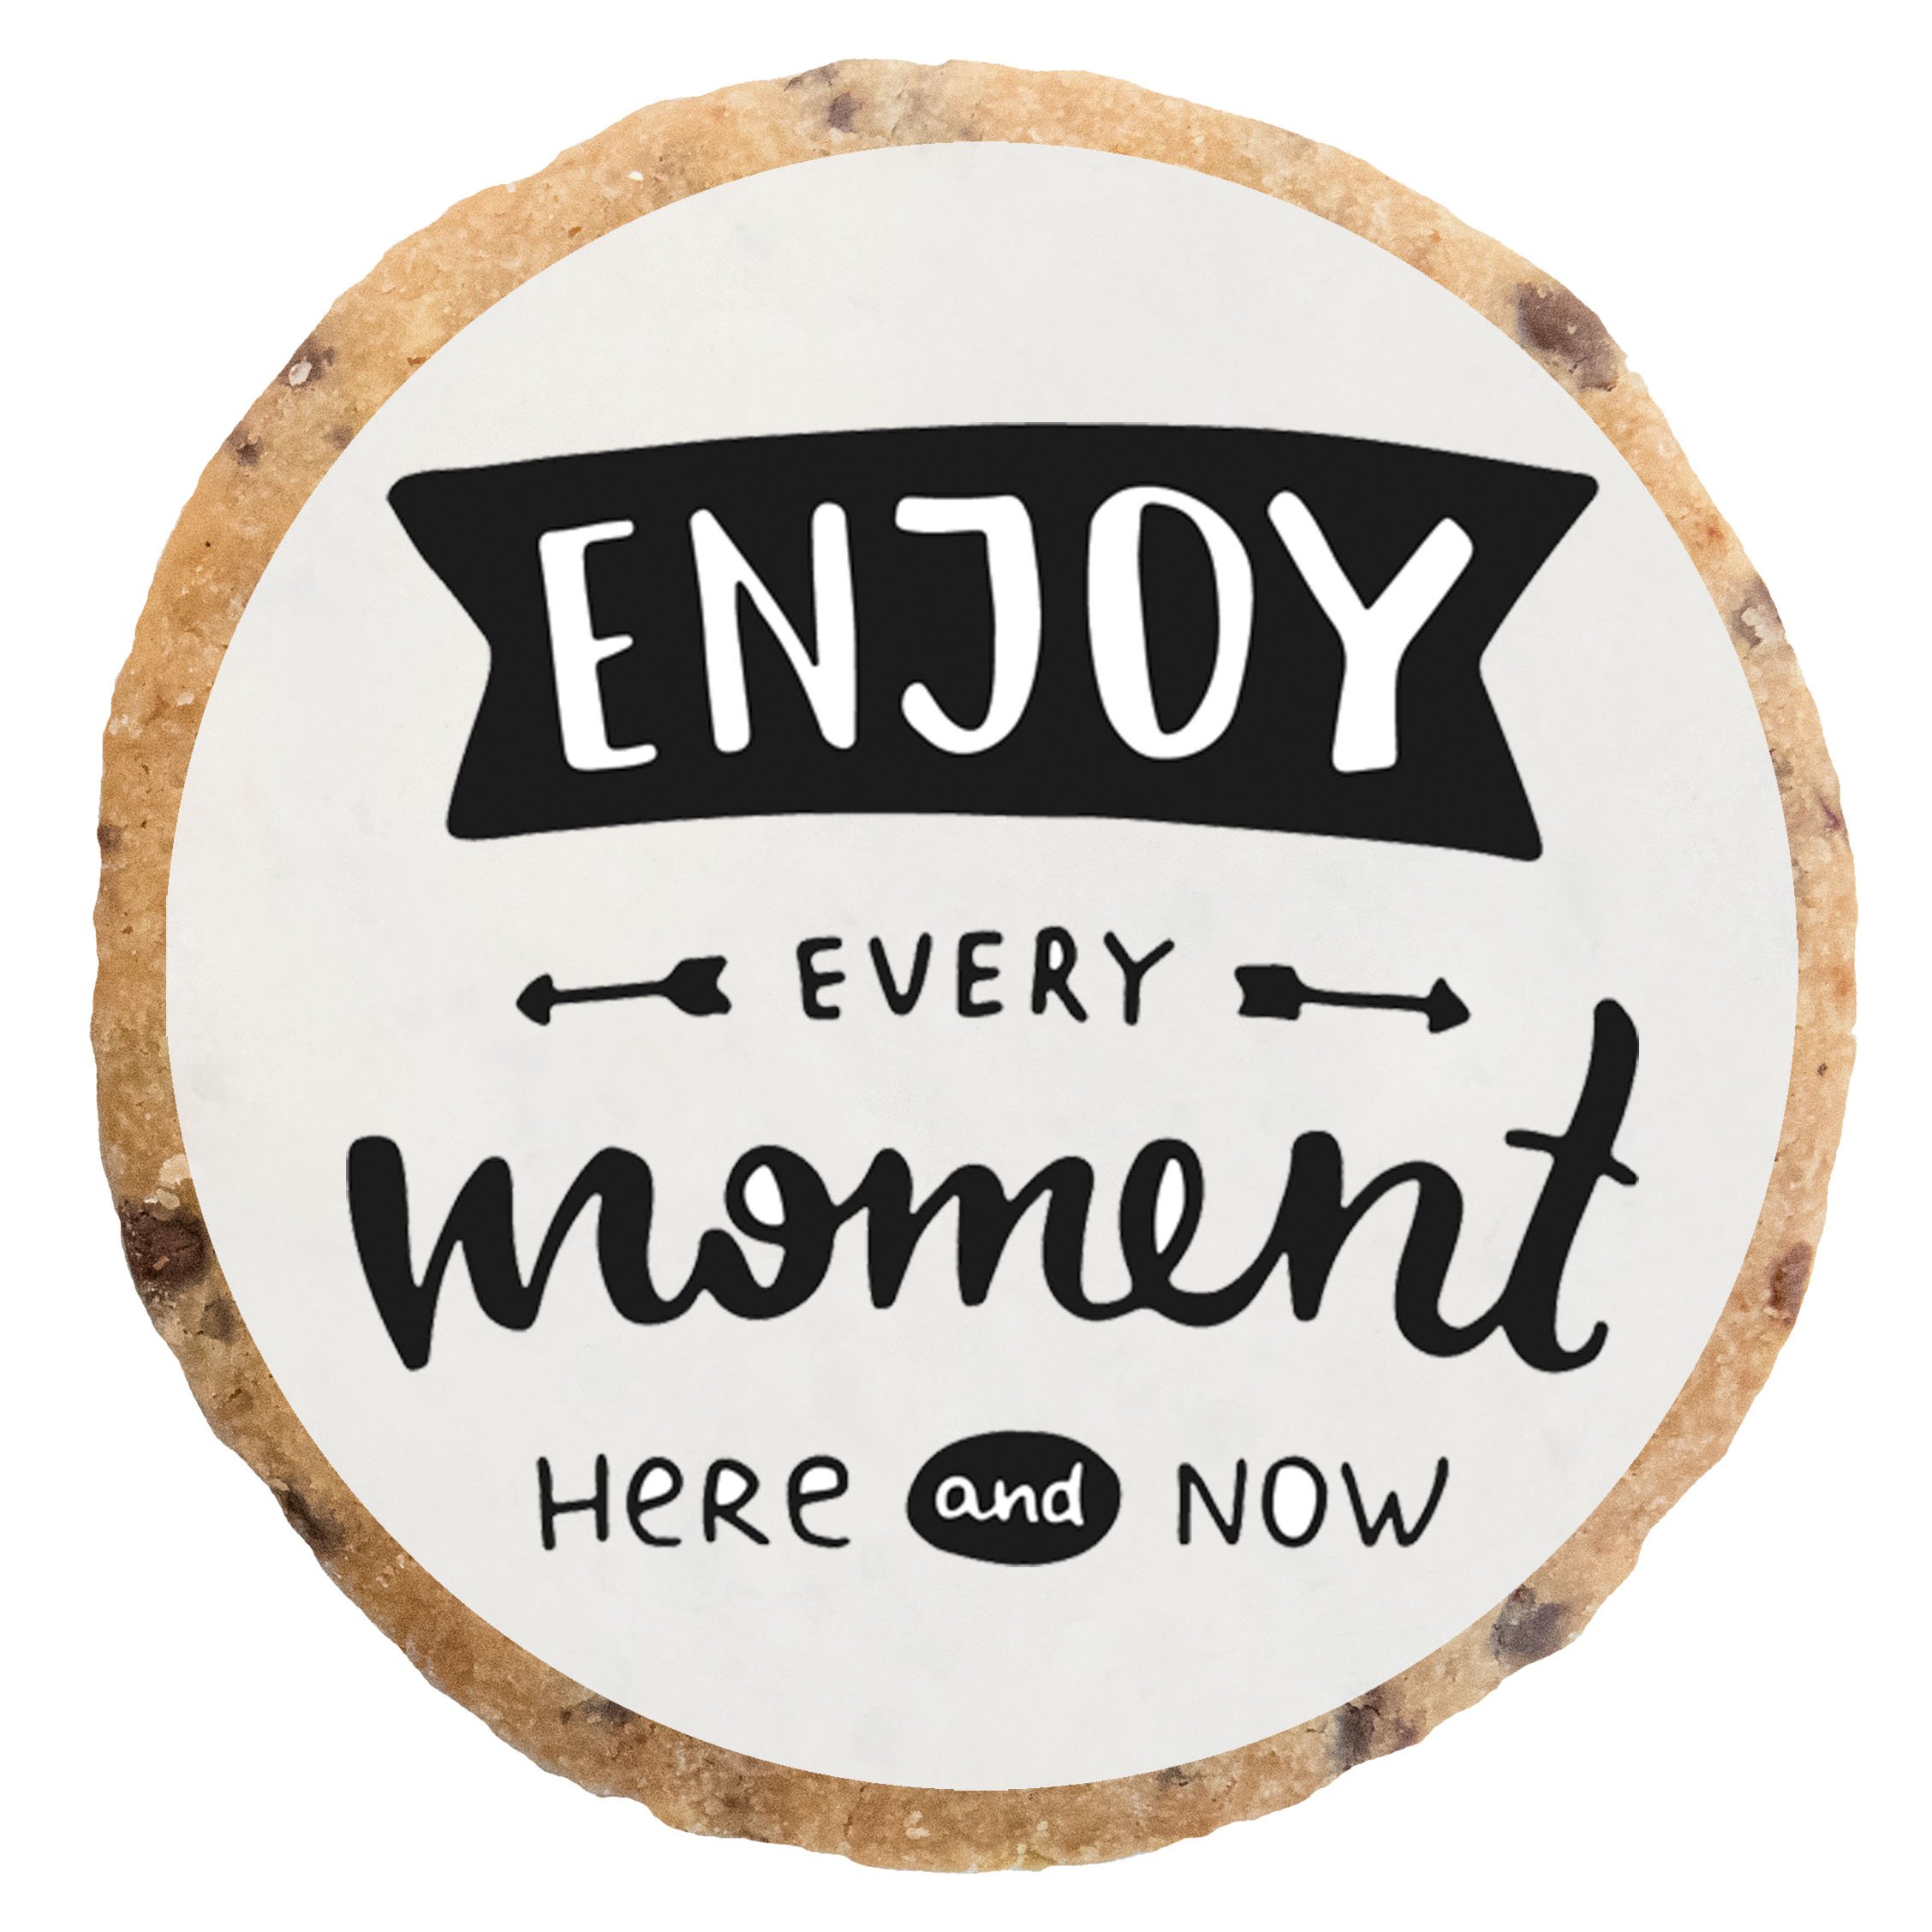 "Enjoy every moment" MotivKEKS